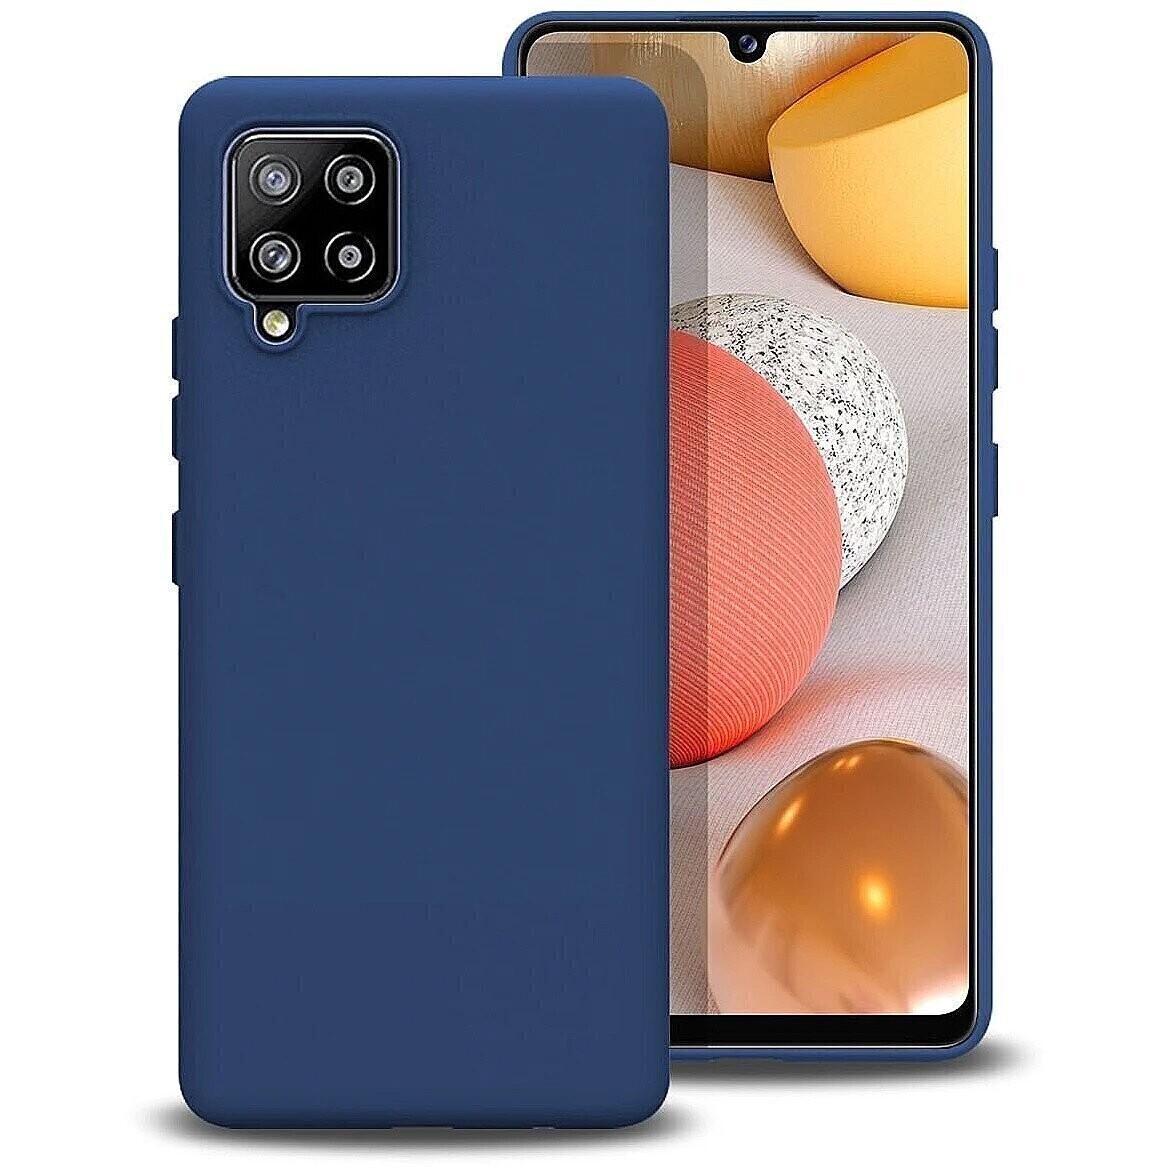 Komass Samsung Galaxy A42 5G Liquid Silicone Back Cover, Blue